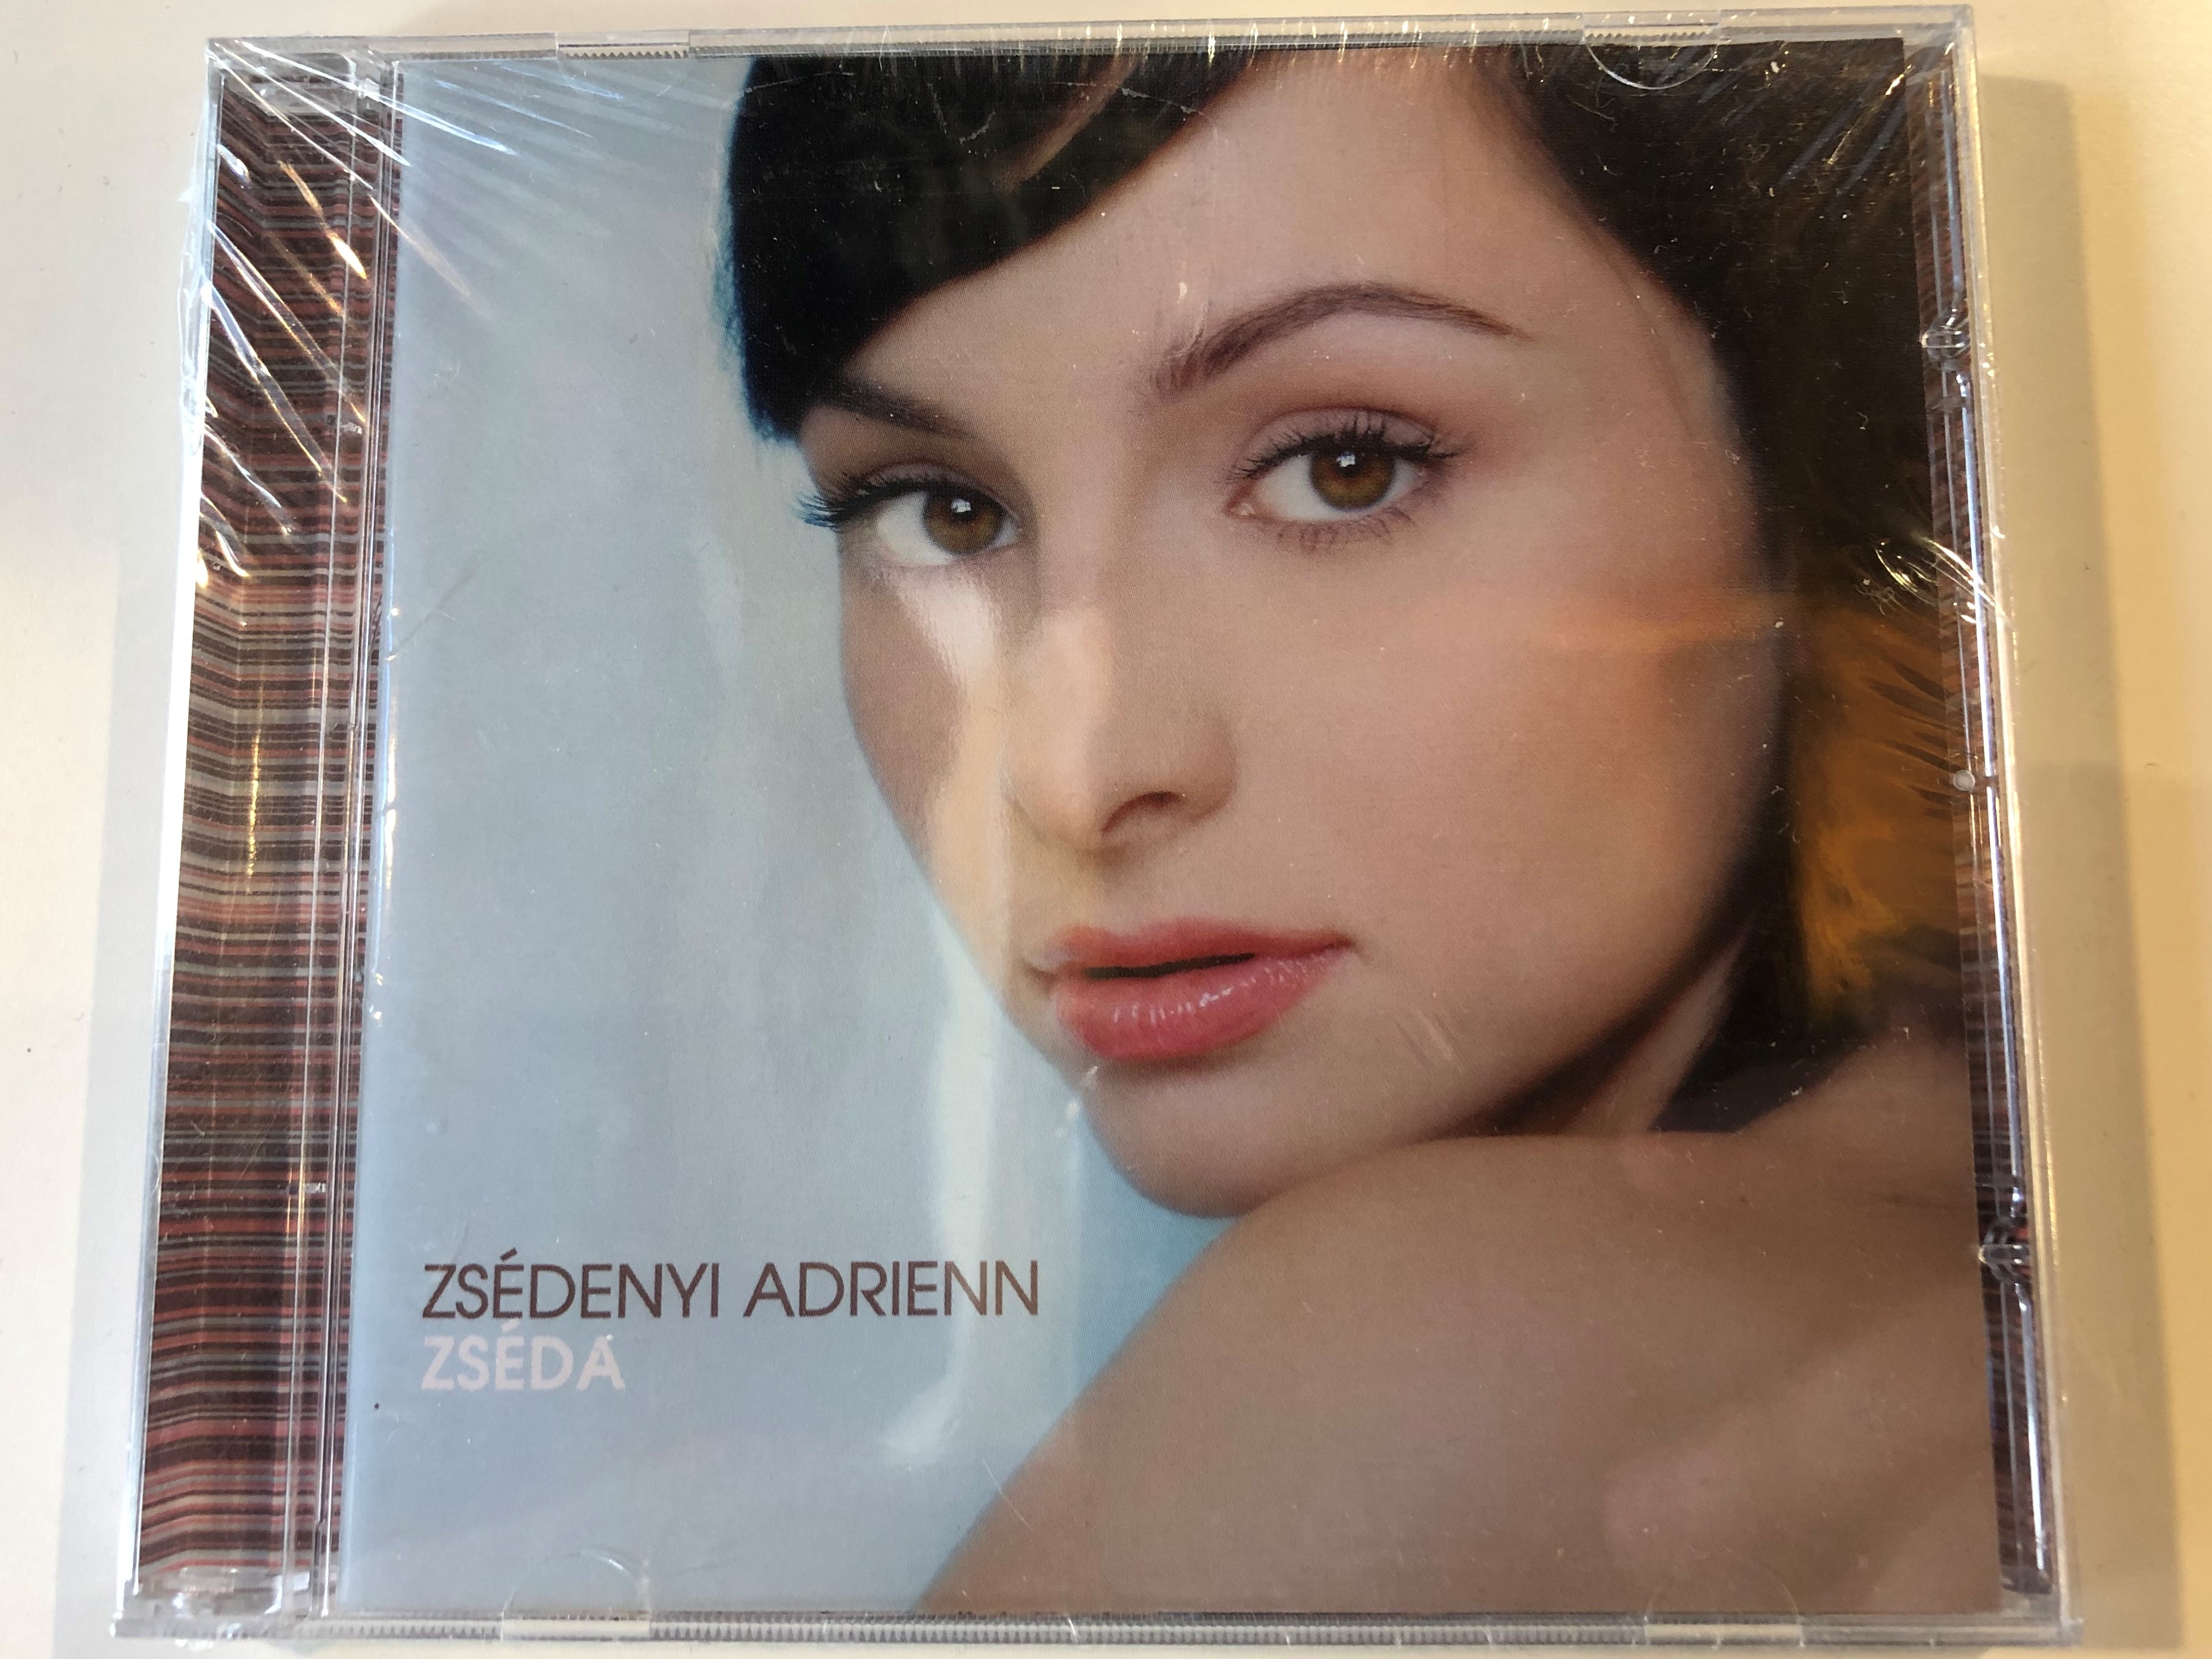 zs-denyi-adrienn-zs-da-magneoton-audio-cd-2003-5050467041523-1-.jpg